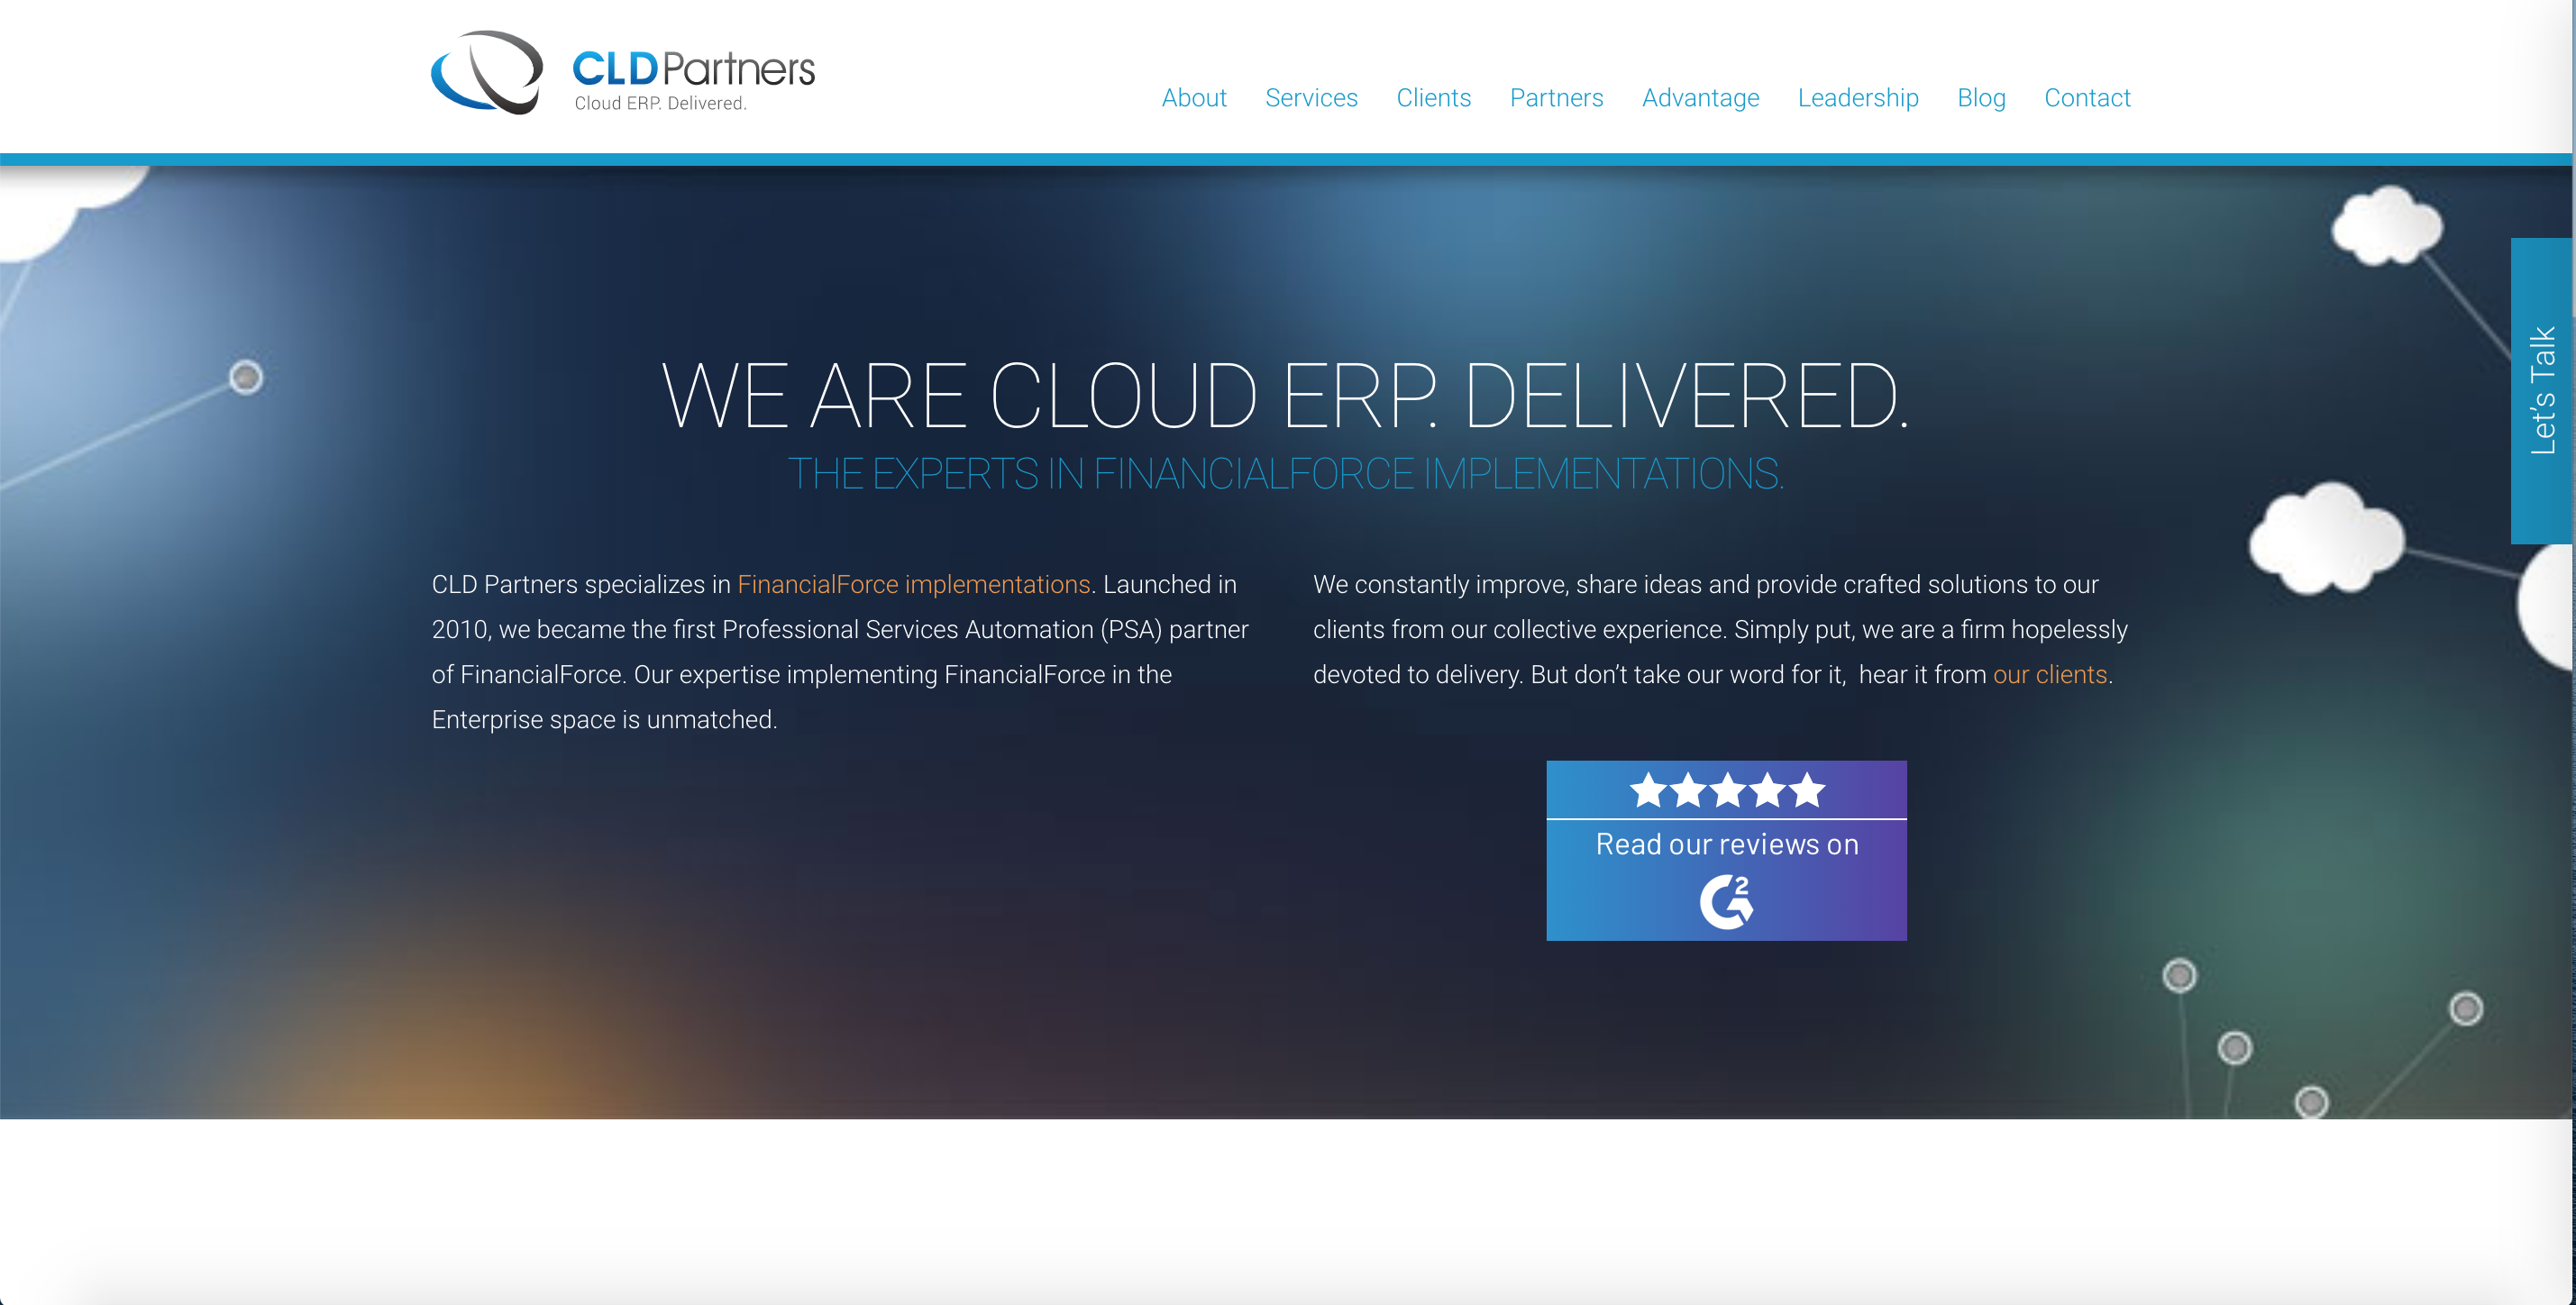 CLD Partners website before hiring us as a Cincinnati Web Design agency